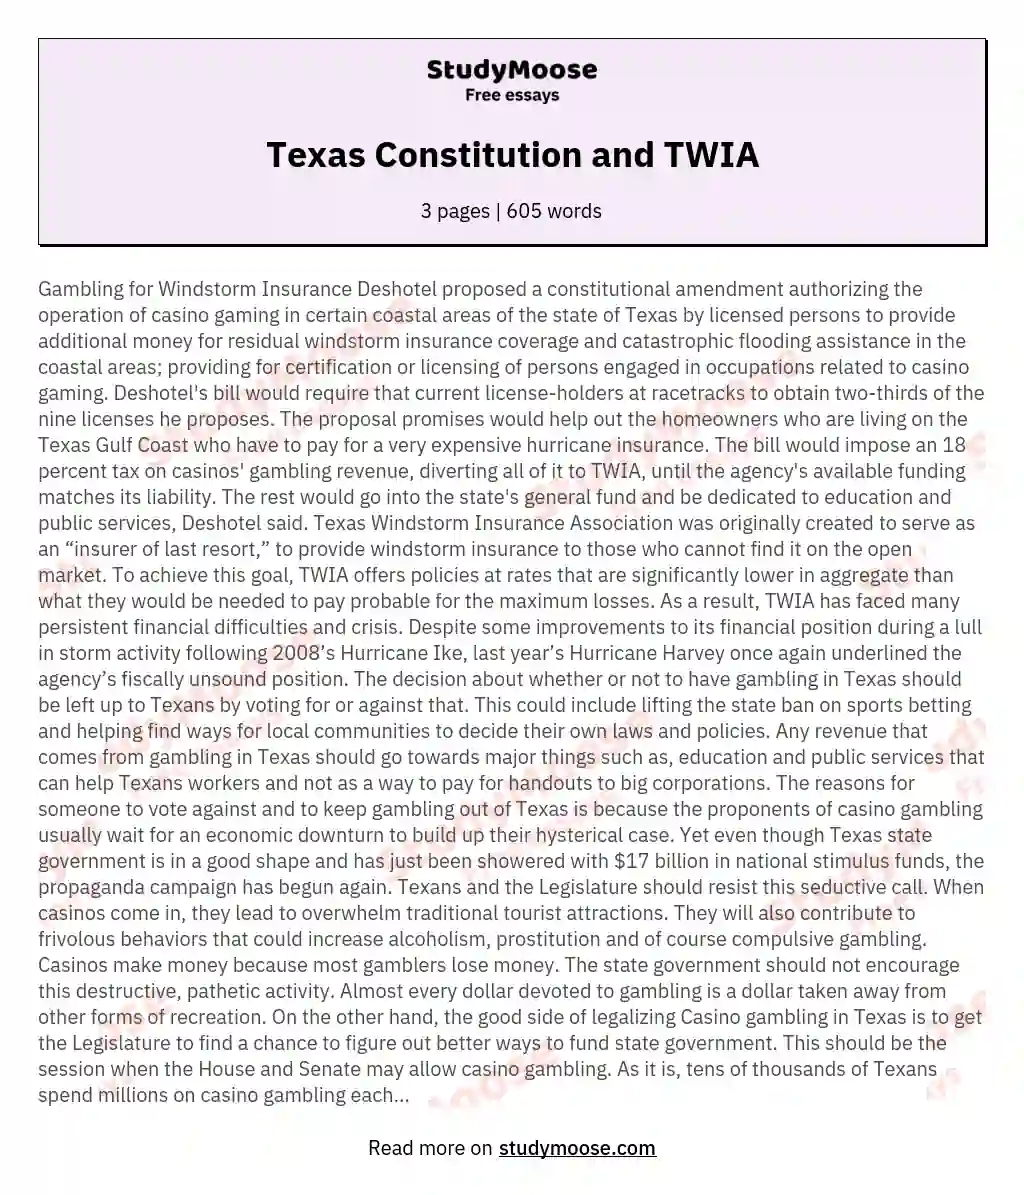 Texas Constitution and TWIA essay